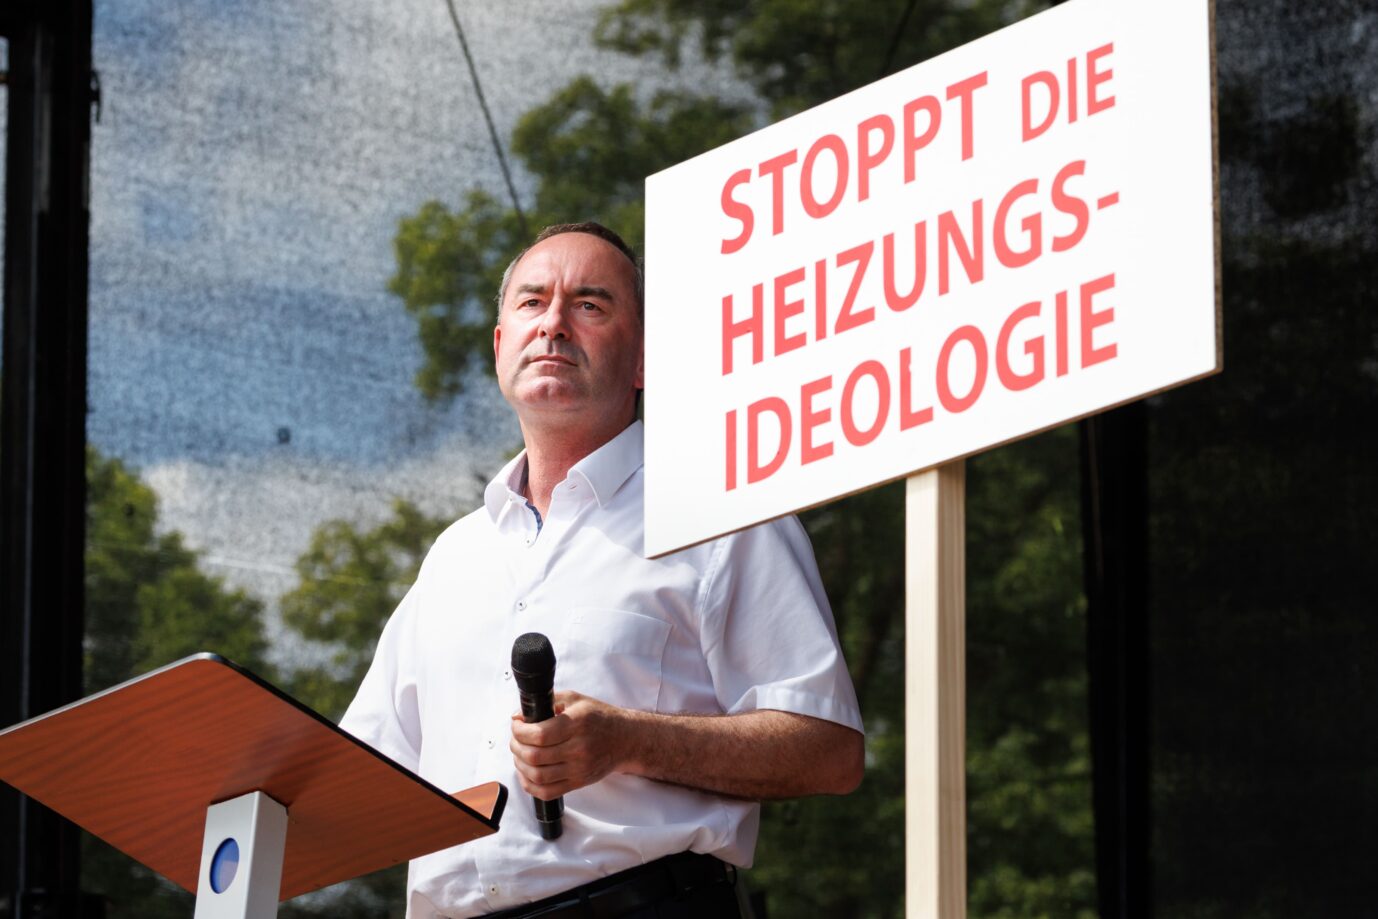 Heizungsverbot: Bayerns Vize-Ministerpräsident Hubert Aiwanger (Freie Wähler) kritisierte die Grünen bei der Großkundgebung in Erding scharf. Nun soll er deswegen zurücktreten.